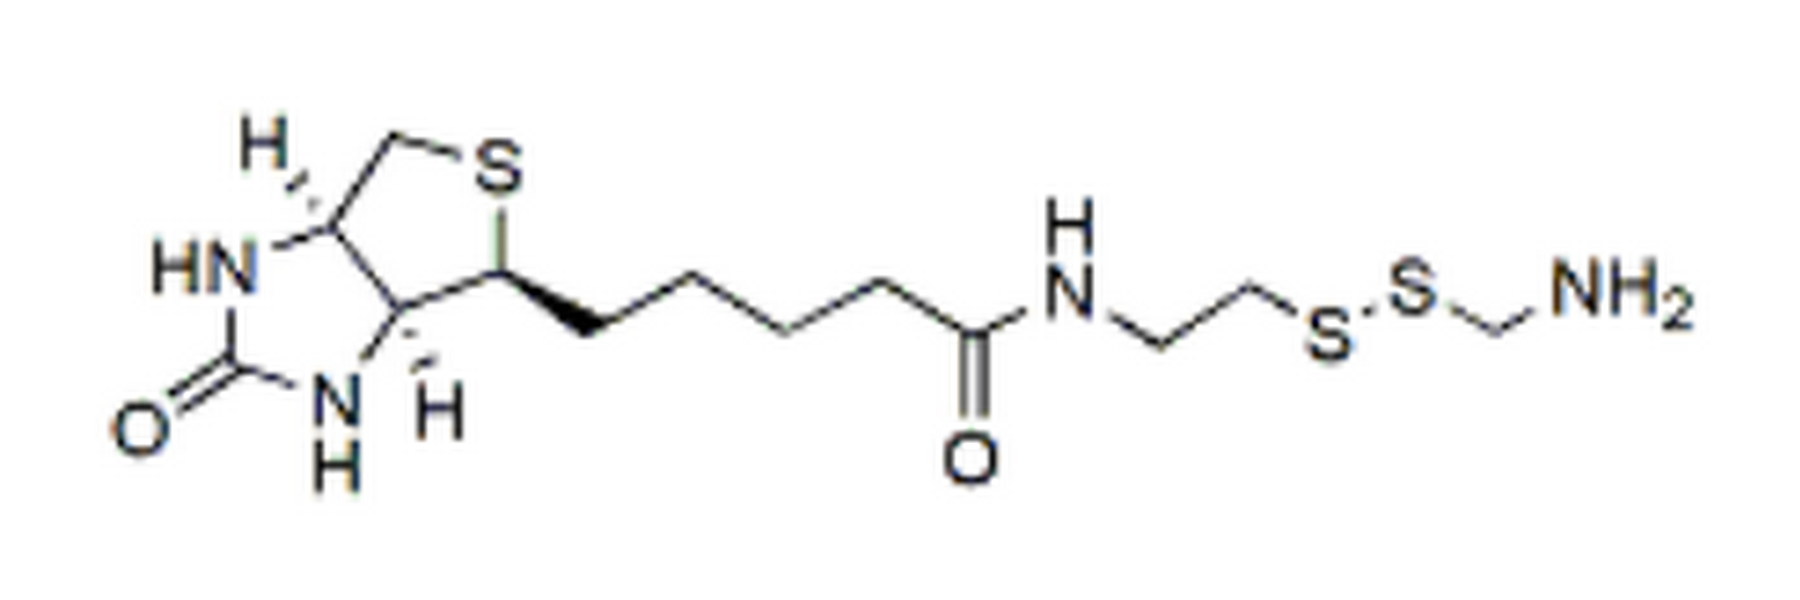 Biotin-SS-Amine HCl Salt